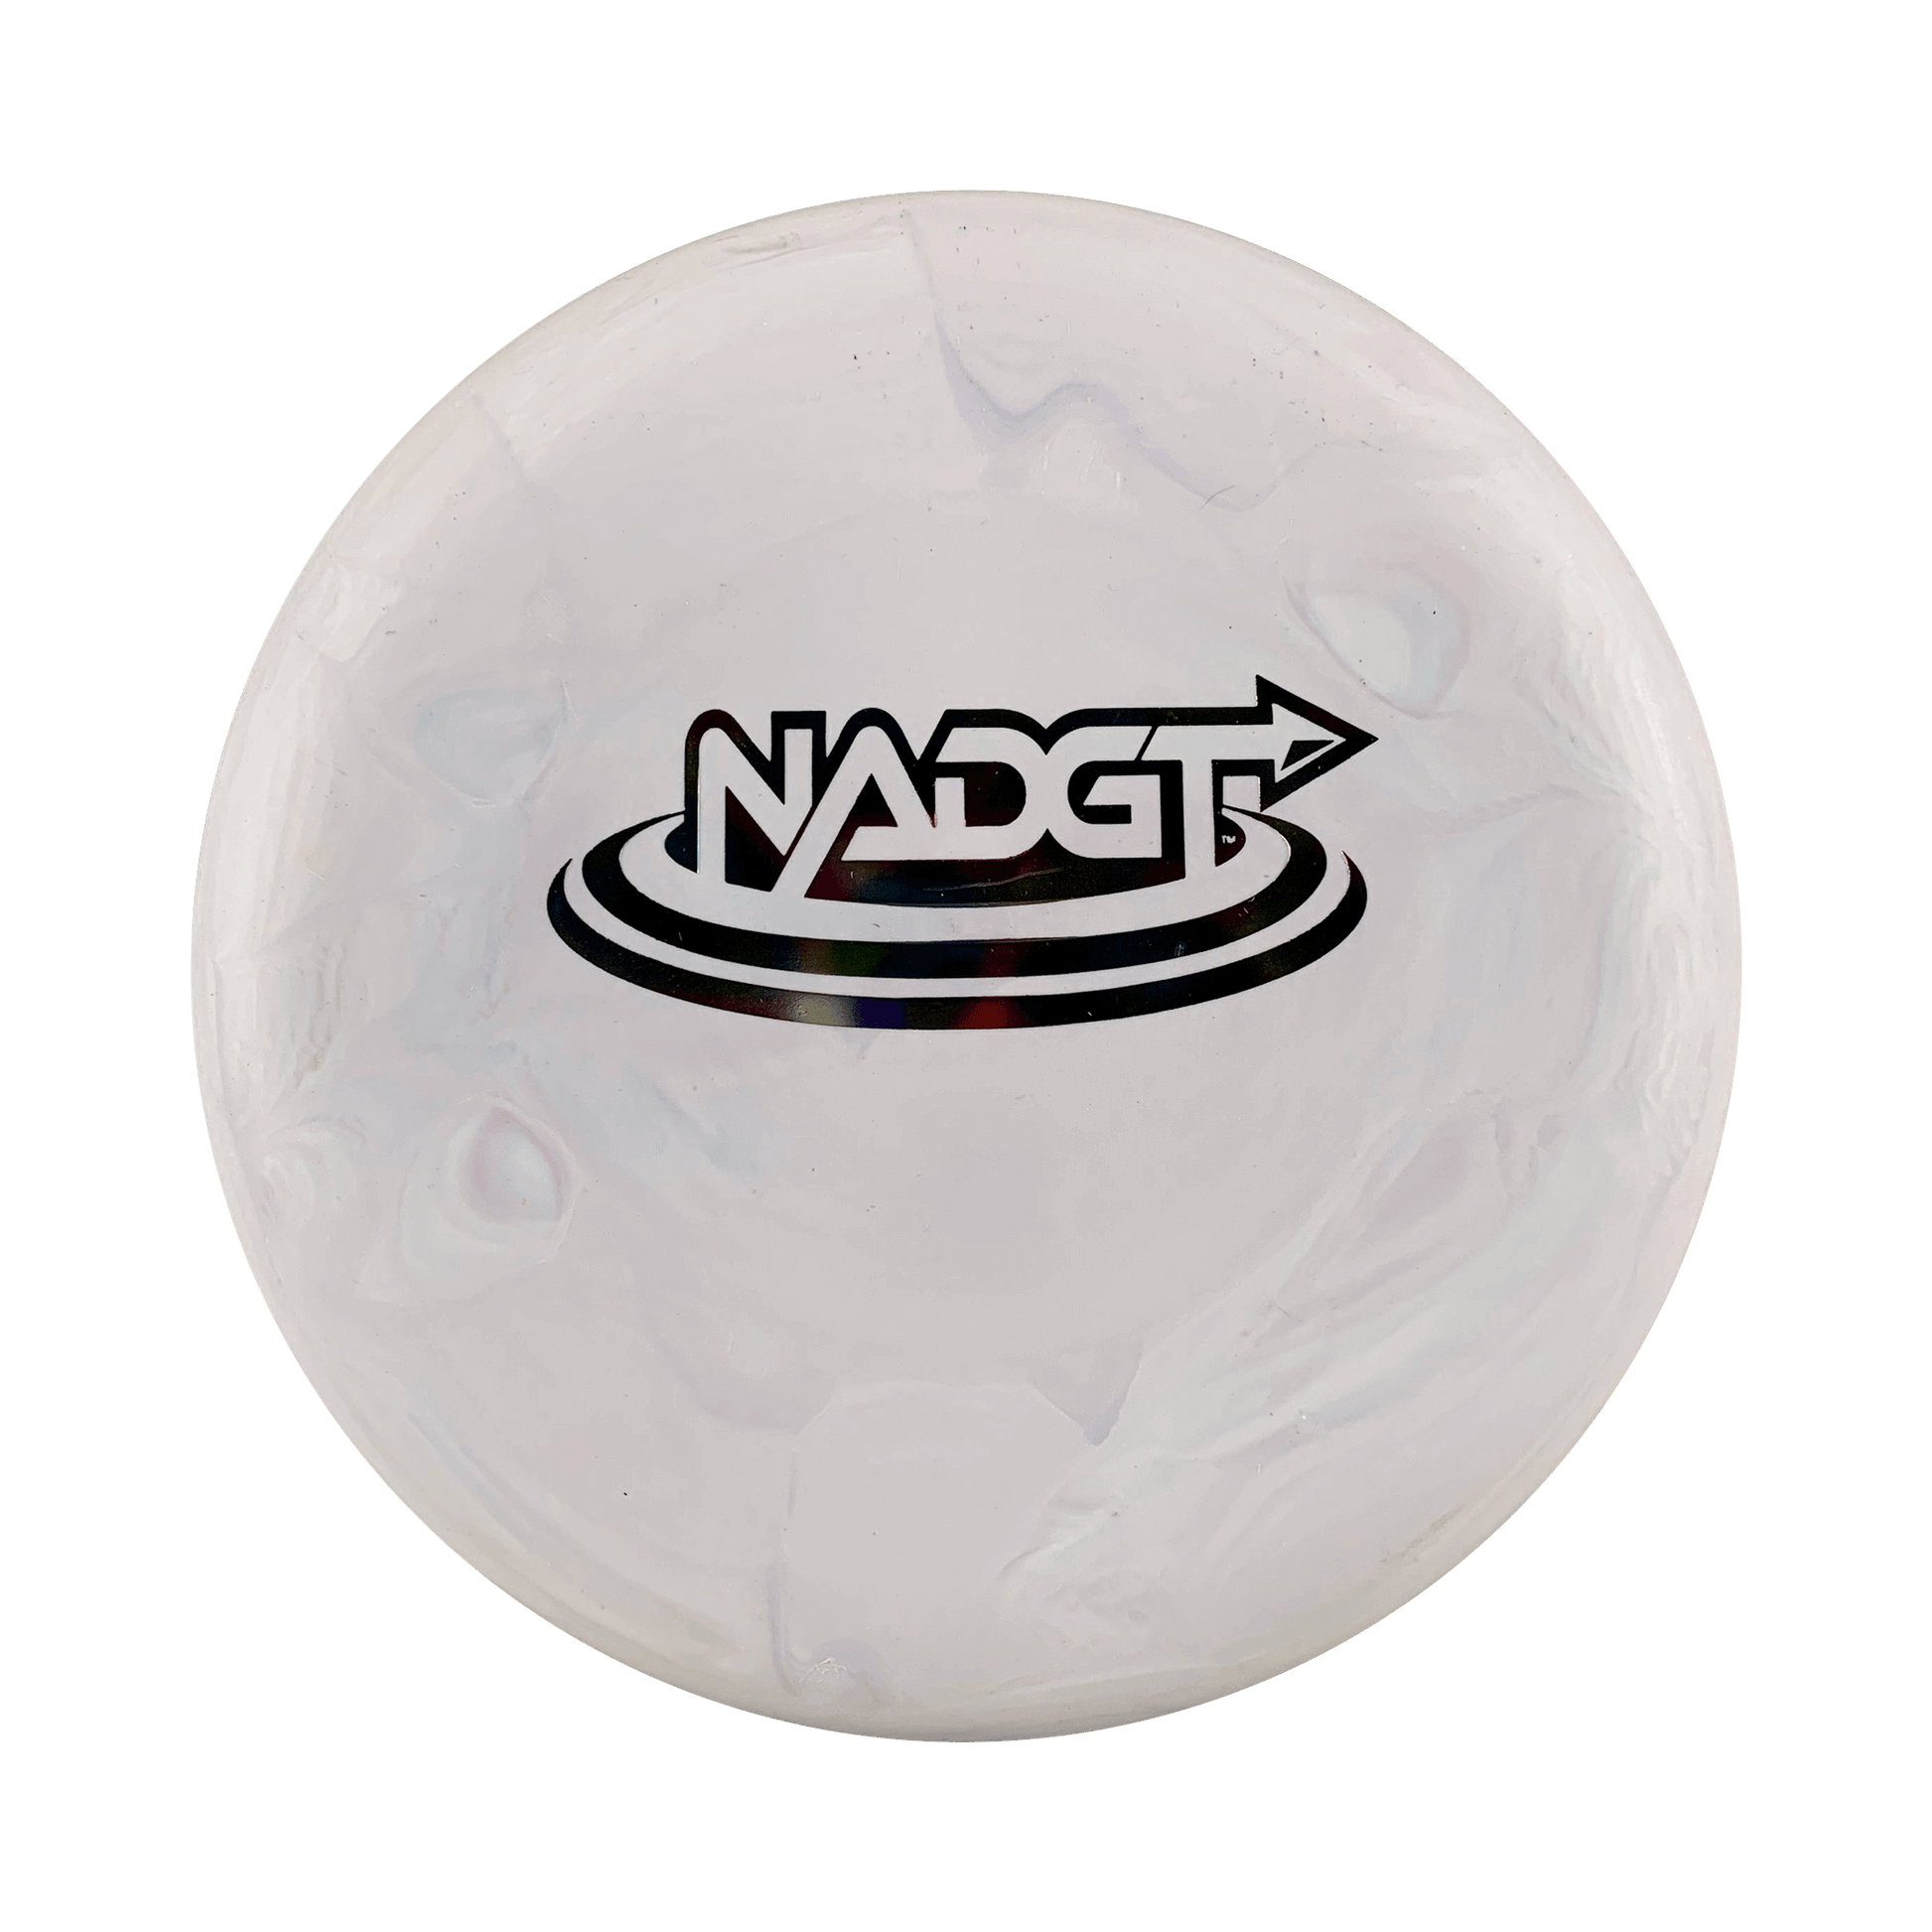 Gravity Hunter - NADGT Stamp Disc Legacy multi / purple 173 